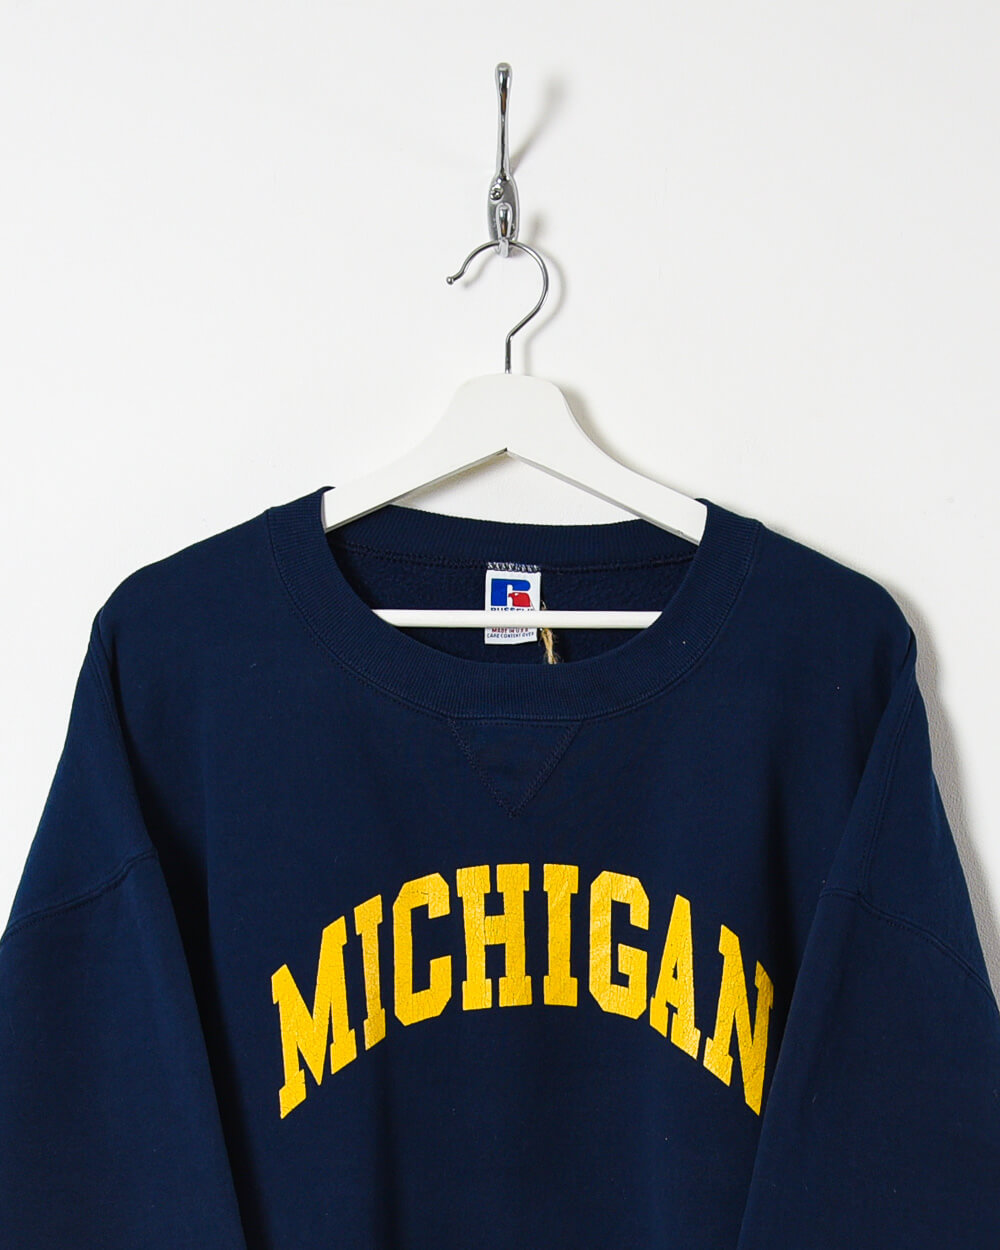 Navy Russell Athletic Michigan Sweatshirt - X-Large